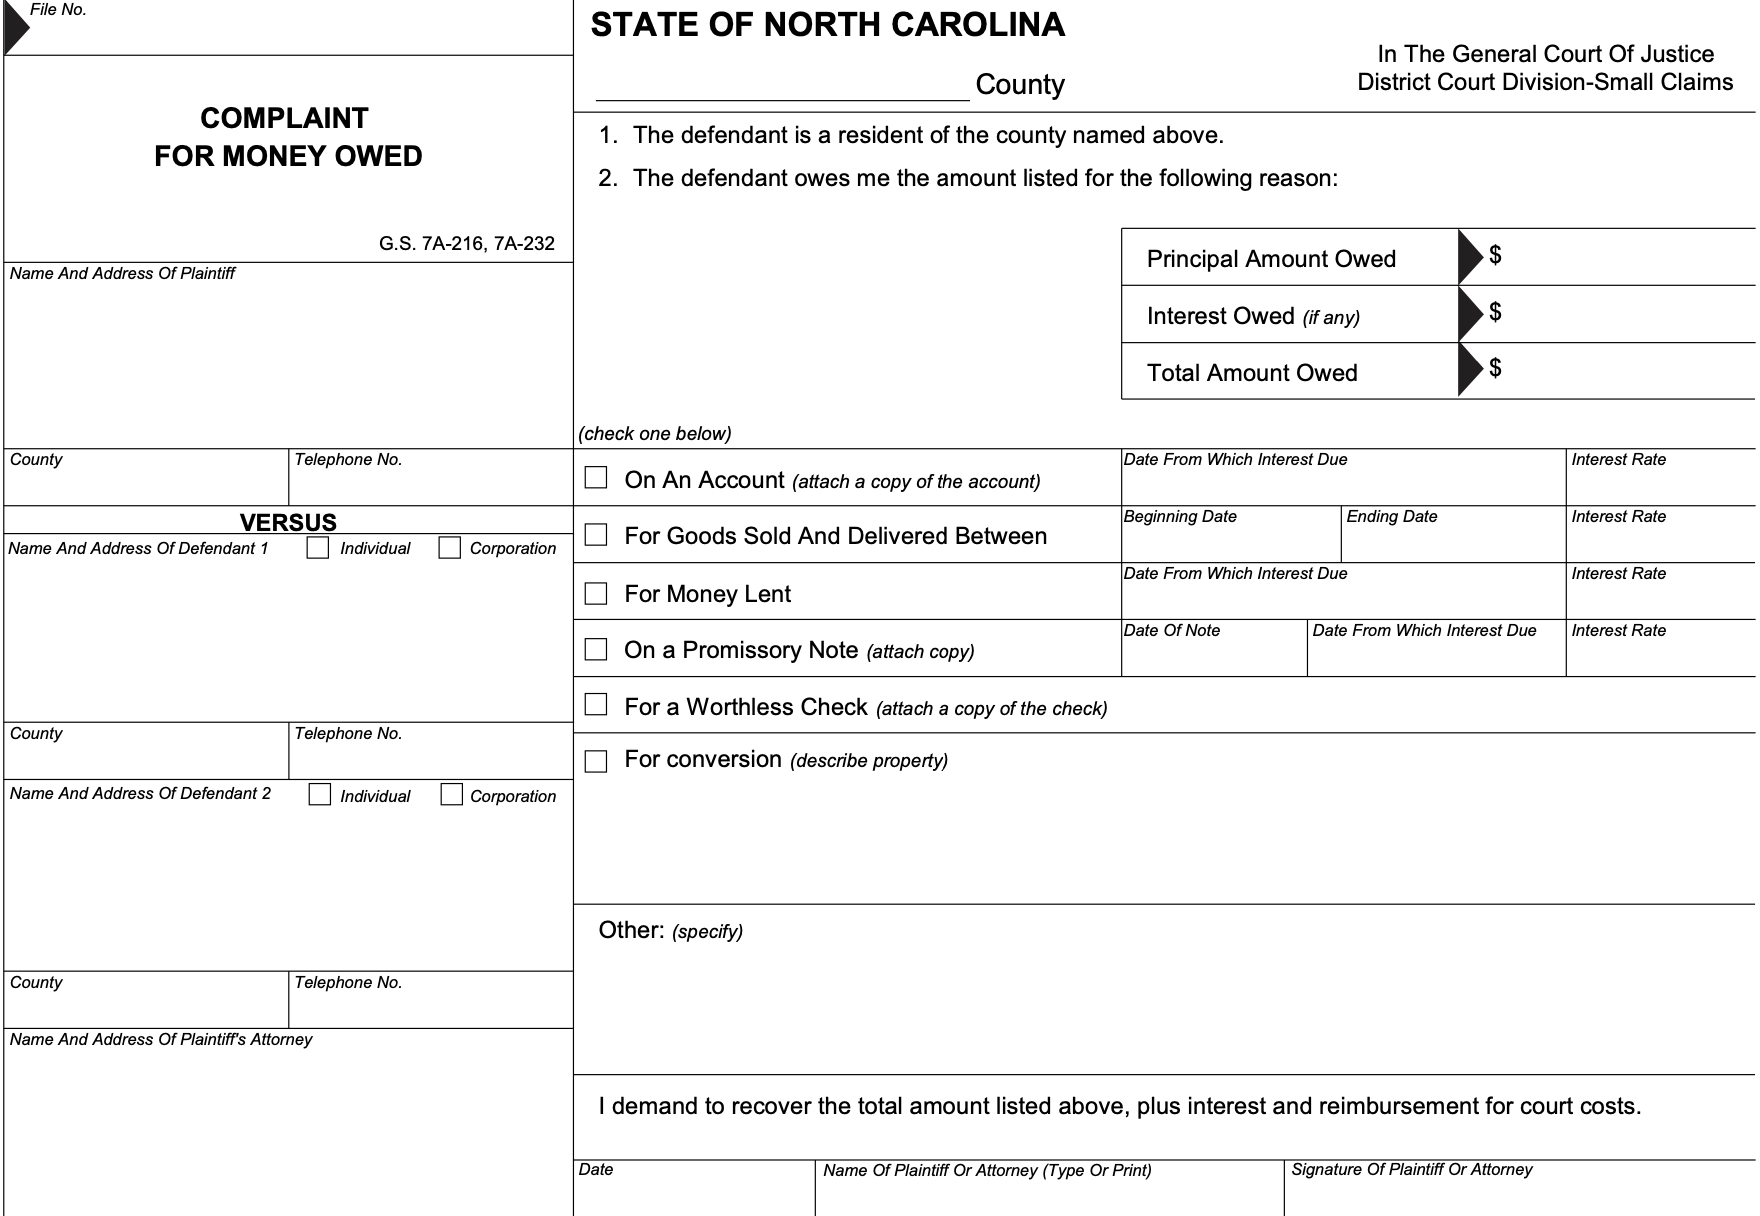 Image of a North Carolina Complaint for Money Owed form